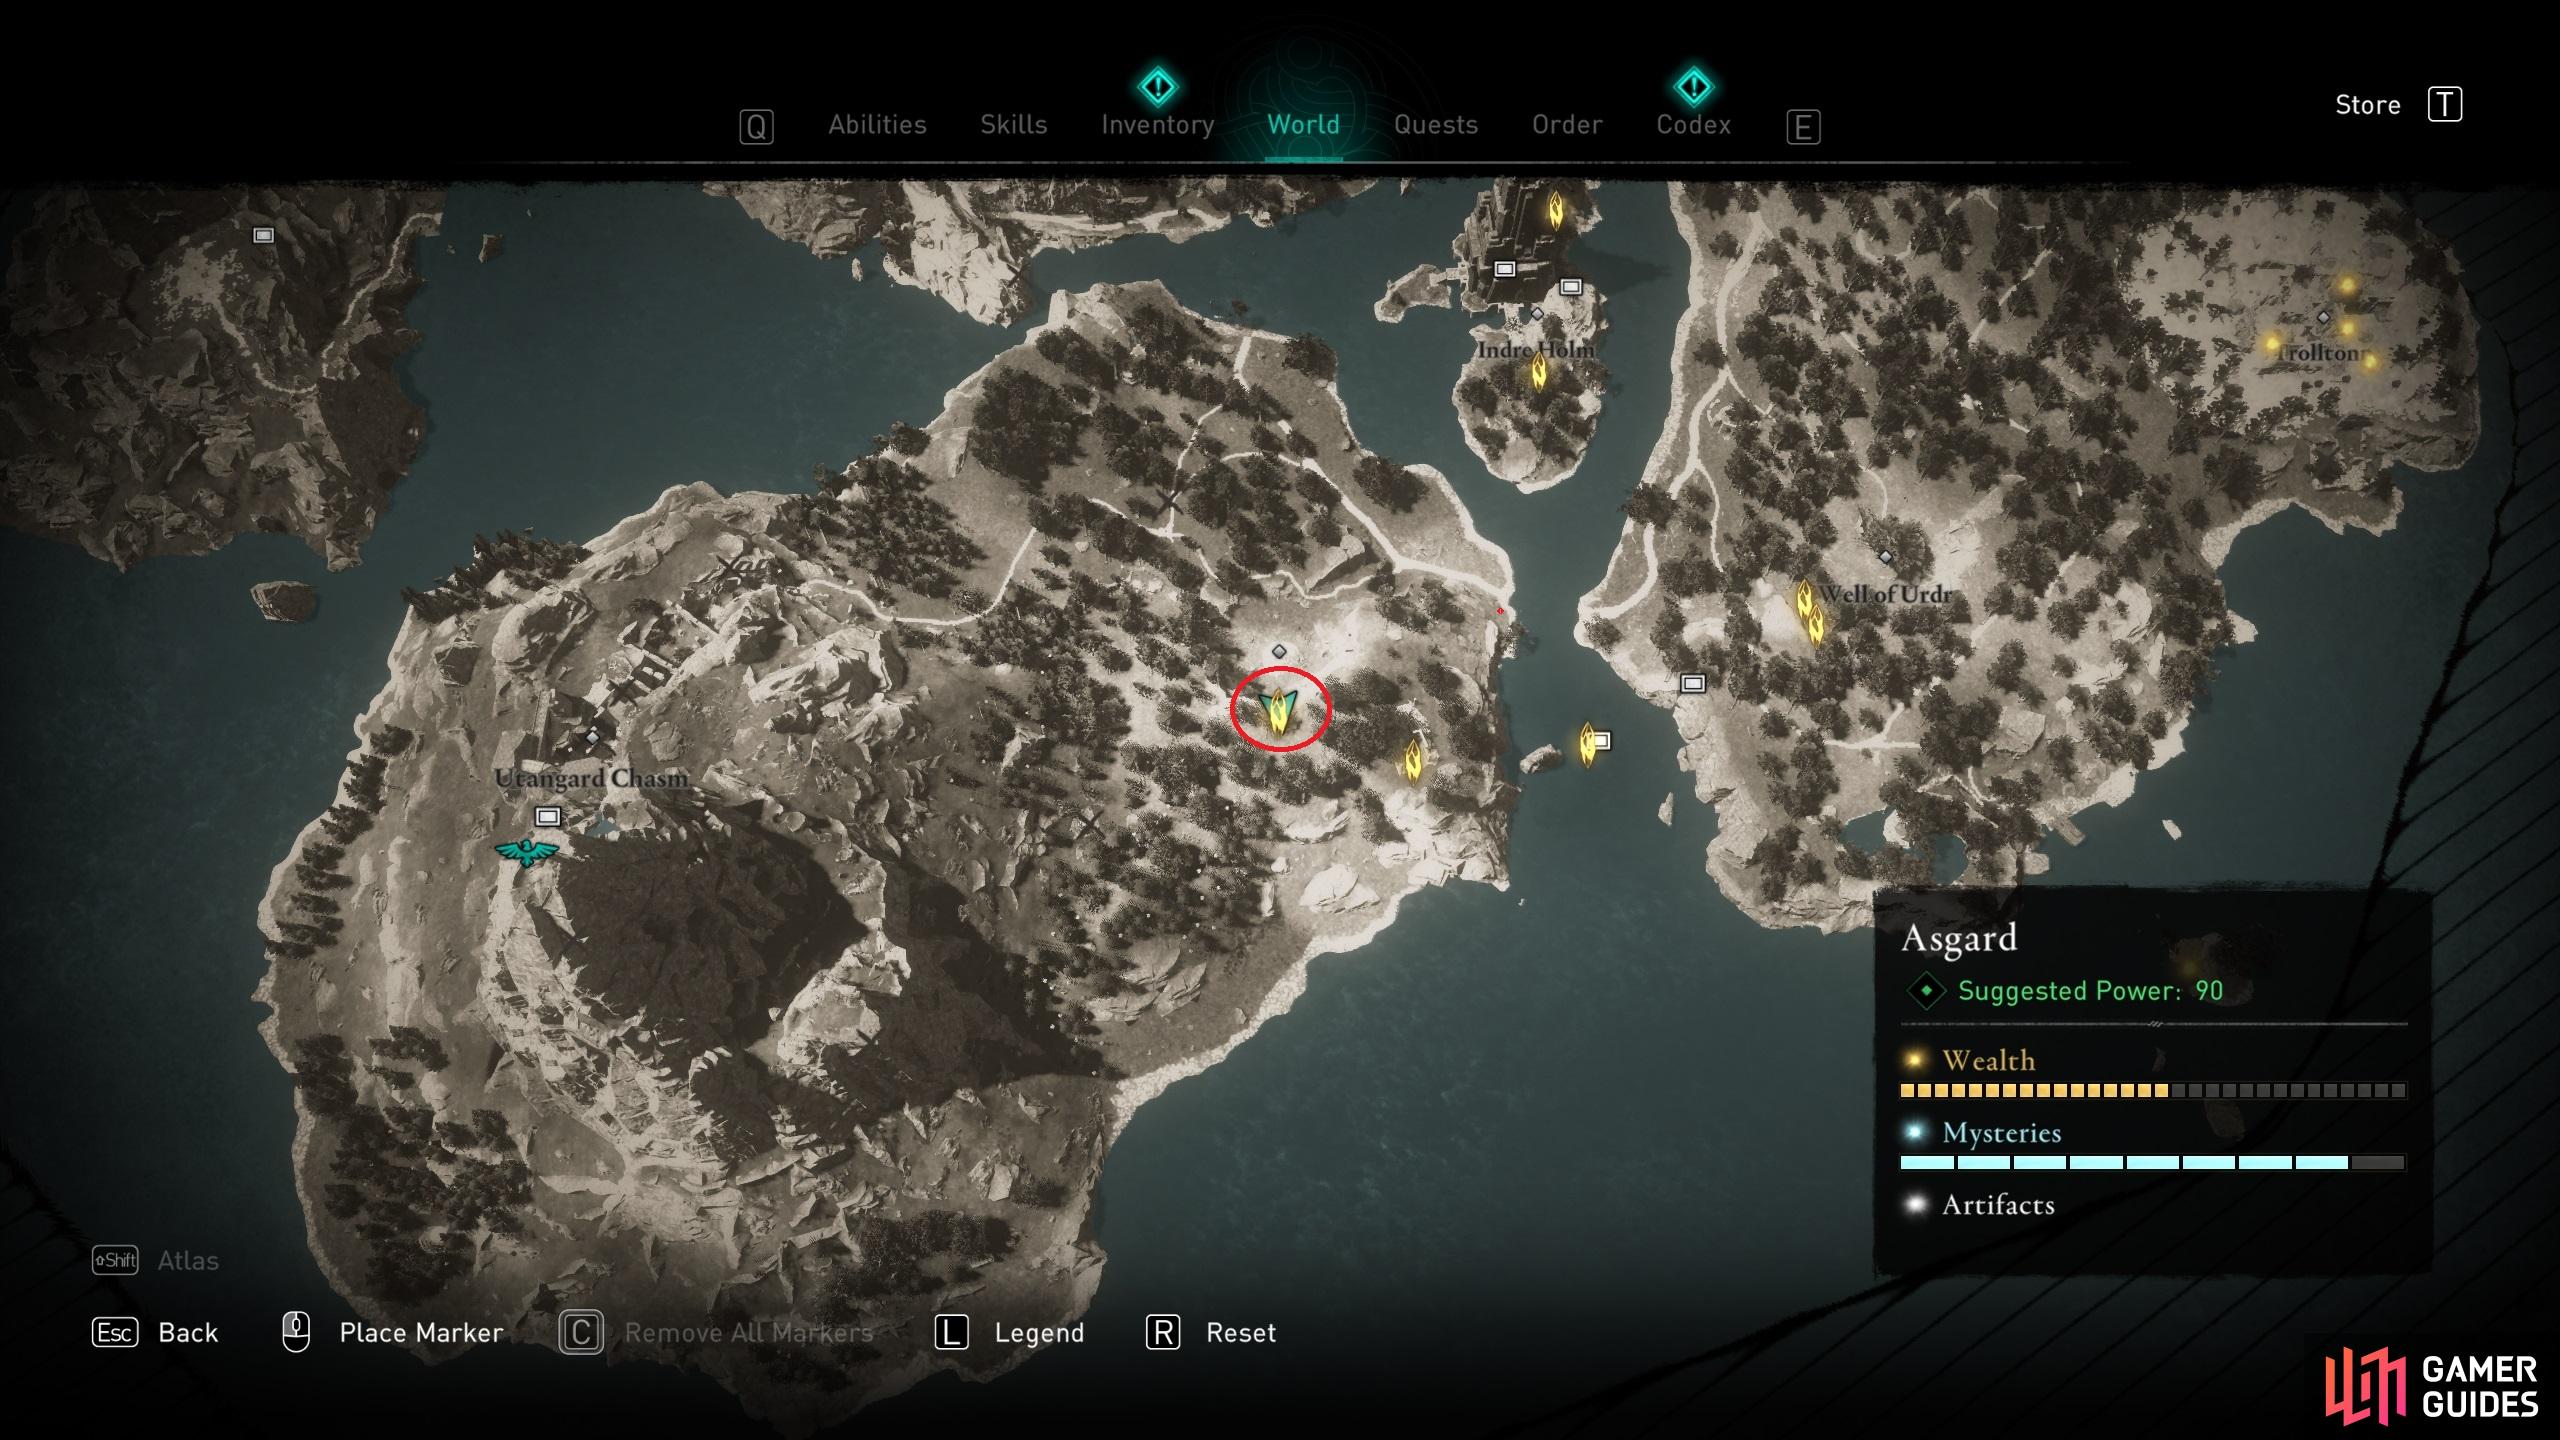 Assassins Creed IV Black Flag  treasure map 240, 607 